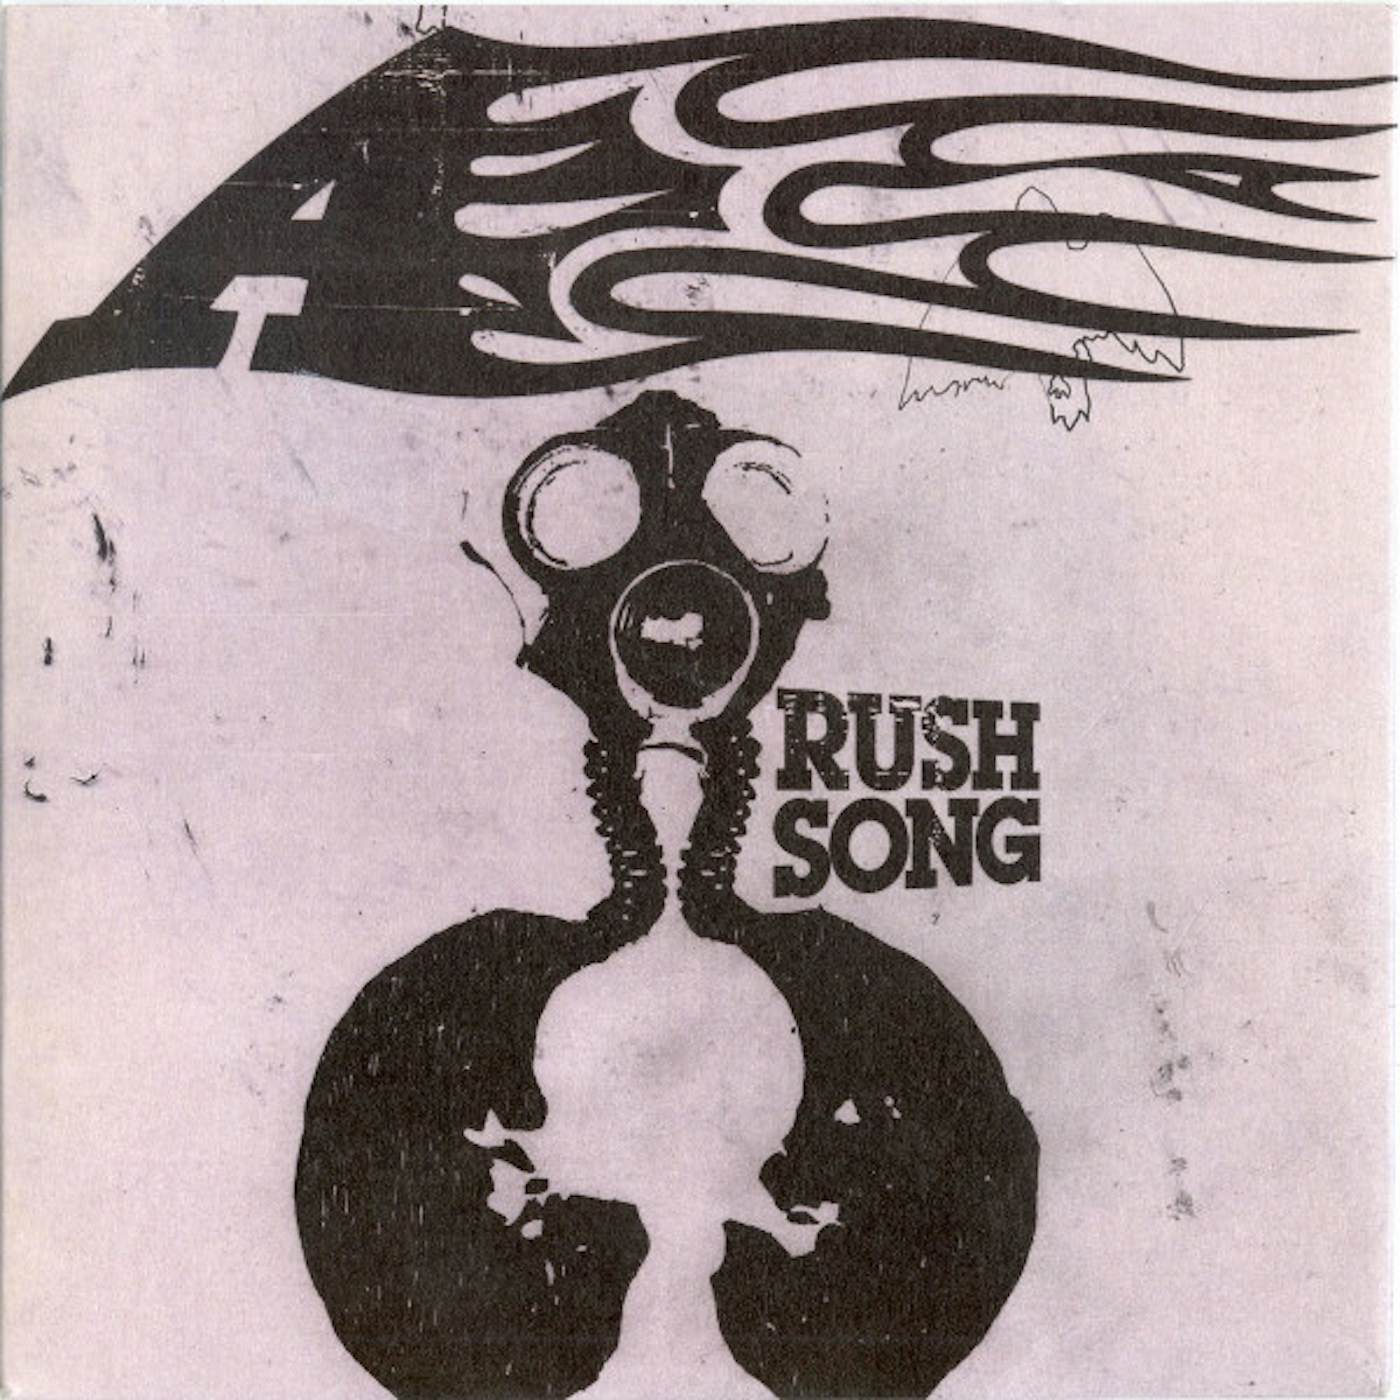 A. Rush Song Vinyl Record